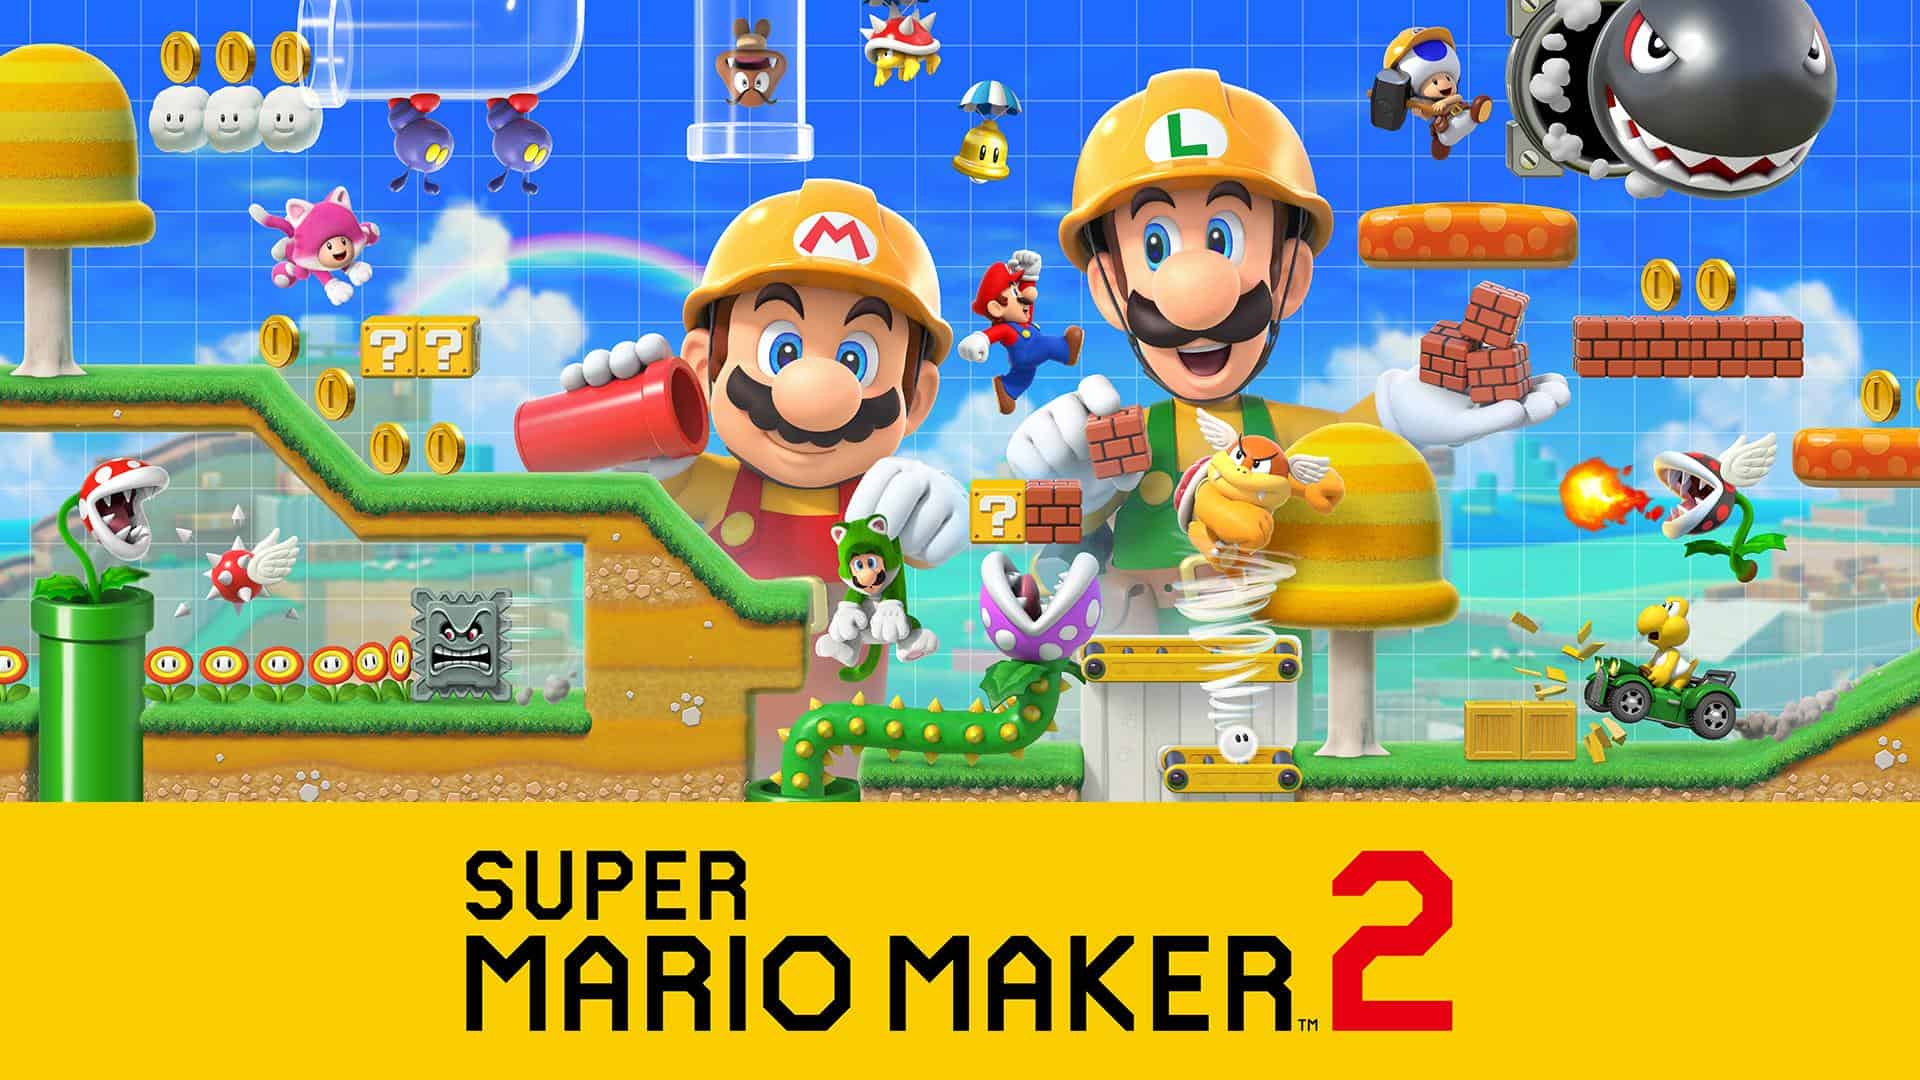 Best Super Mario Games - Super Mario Maker 2